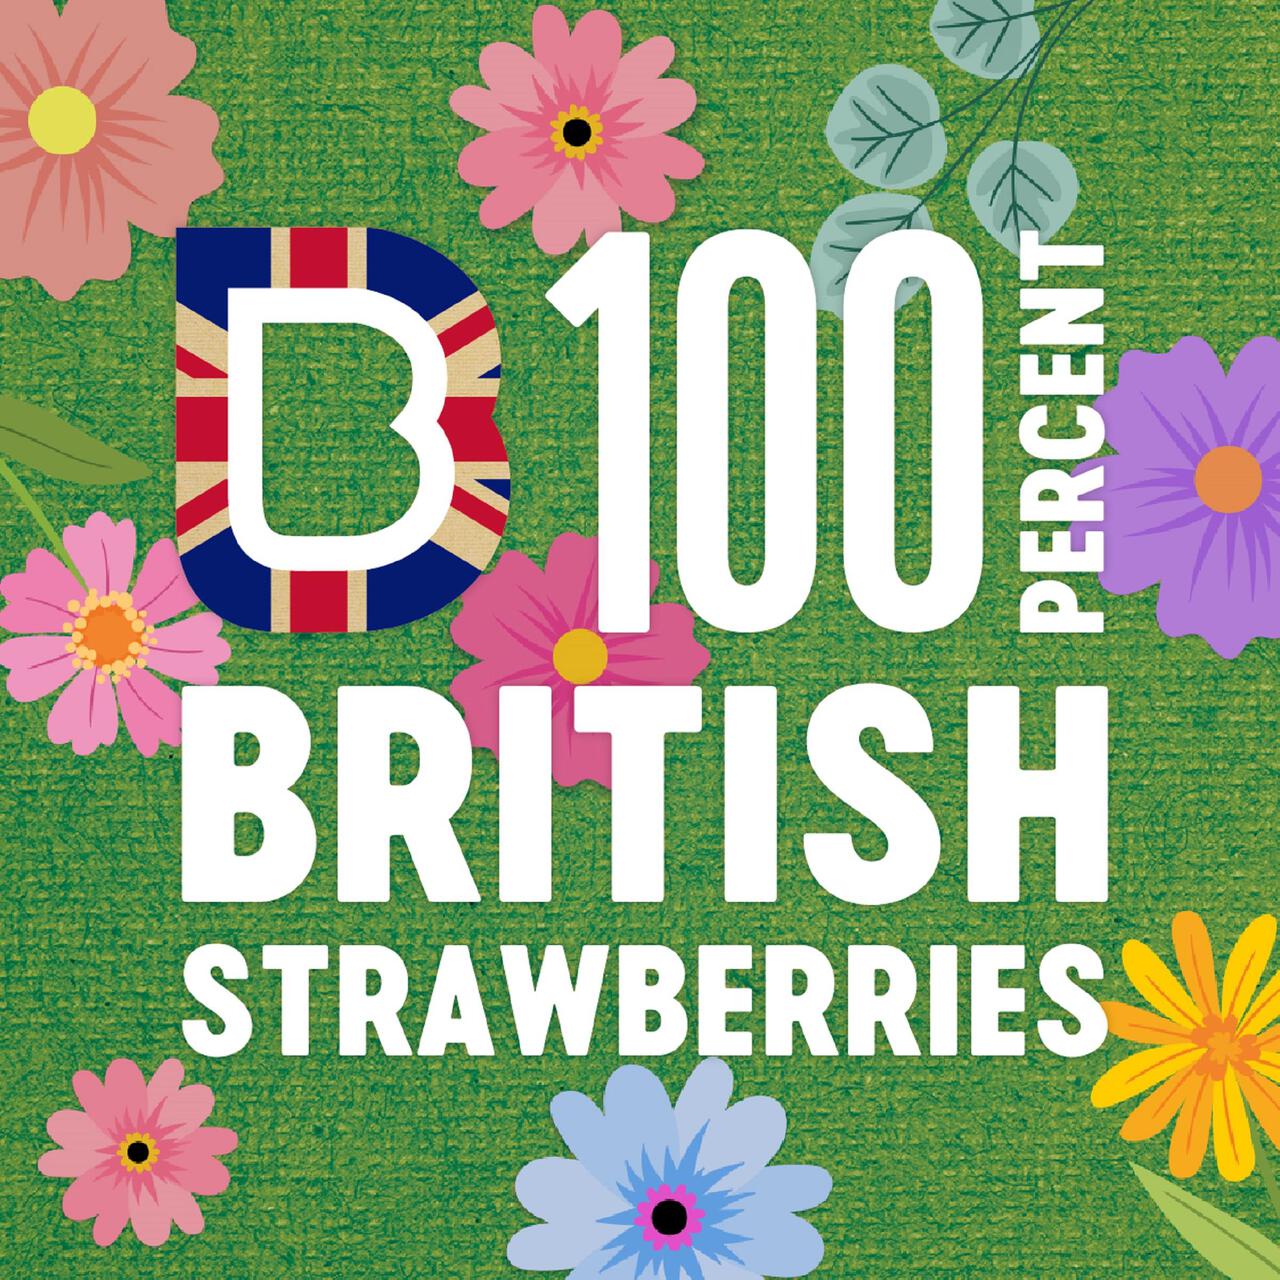 BerryWorld British Strawberries 800g